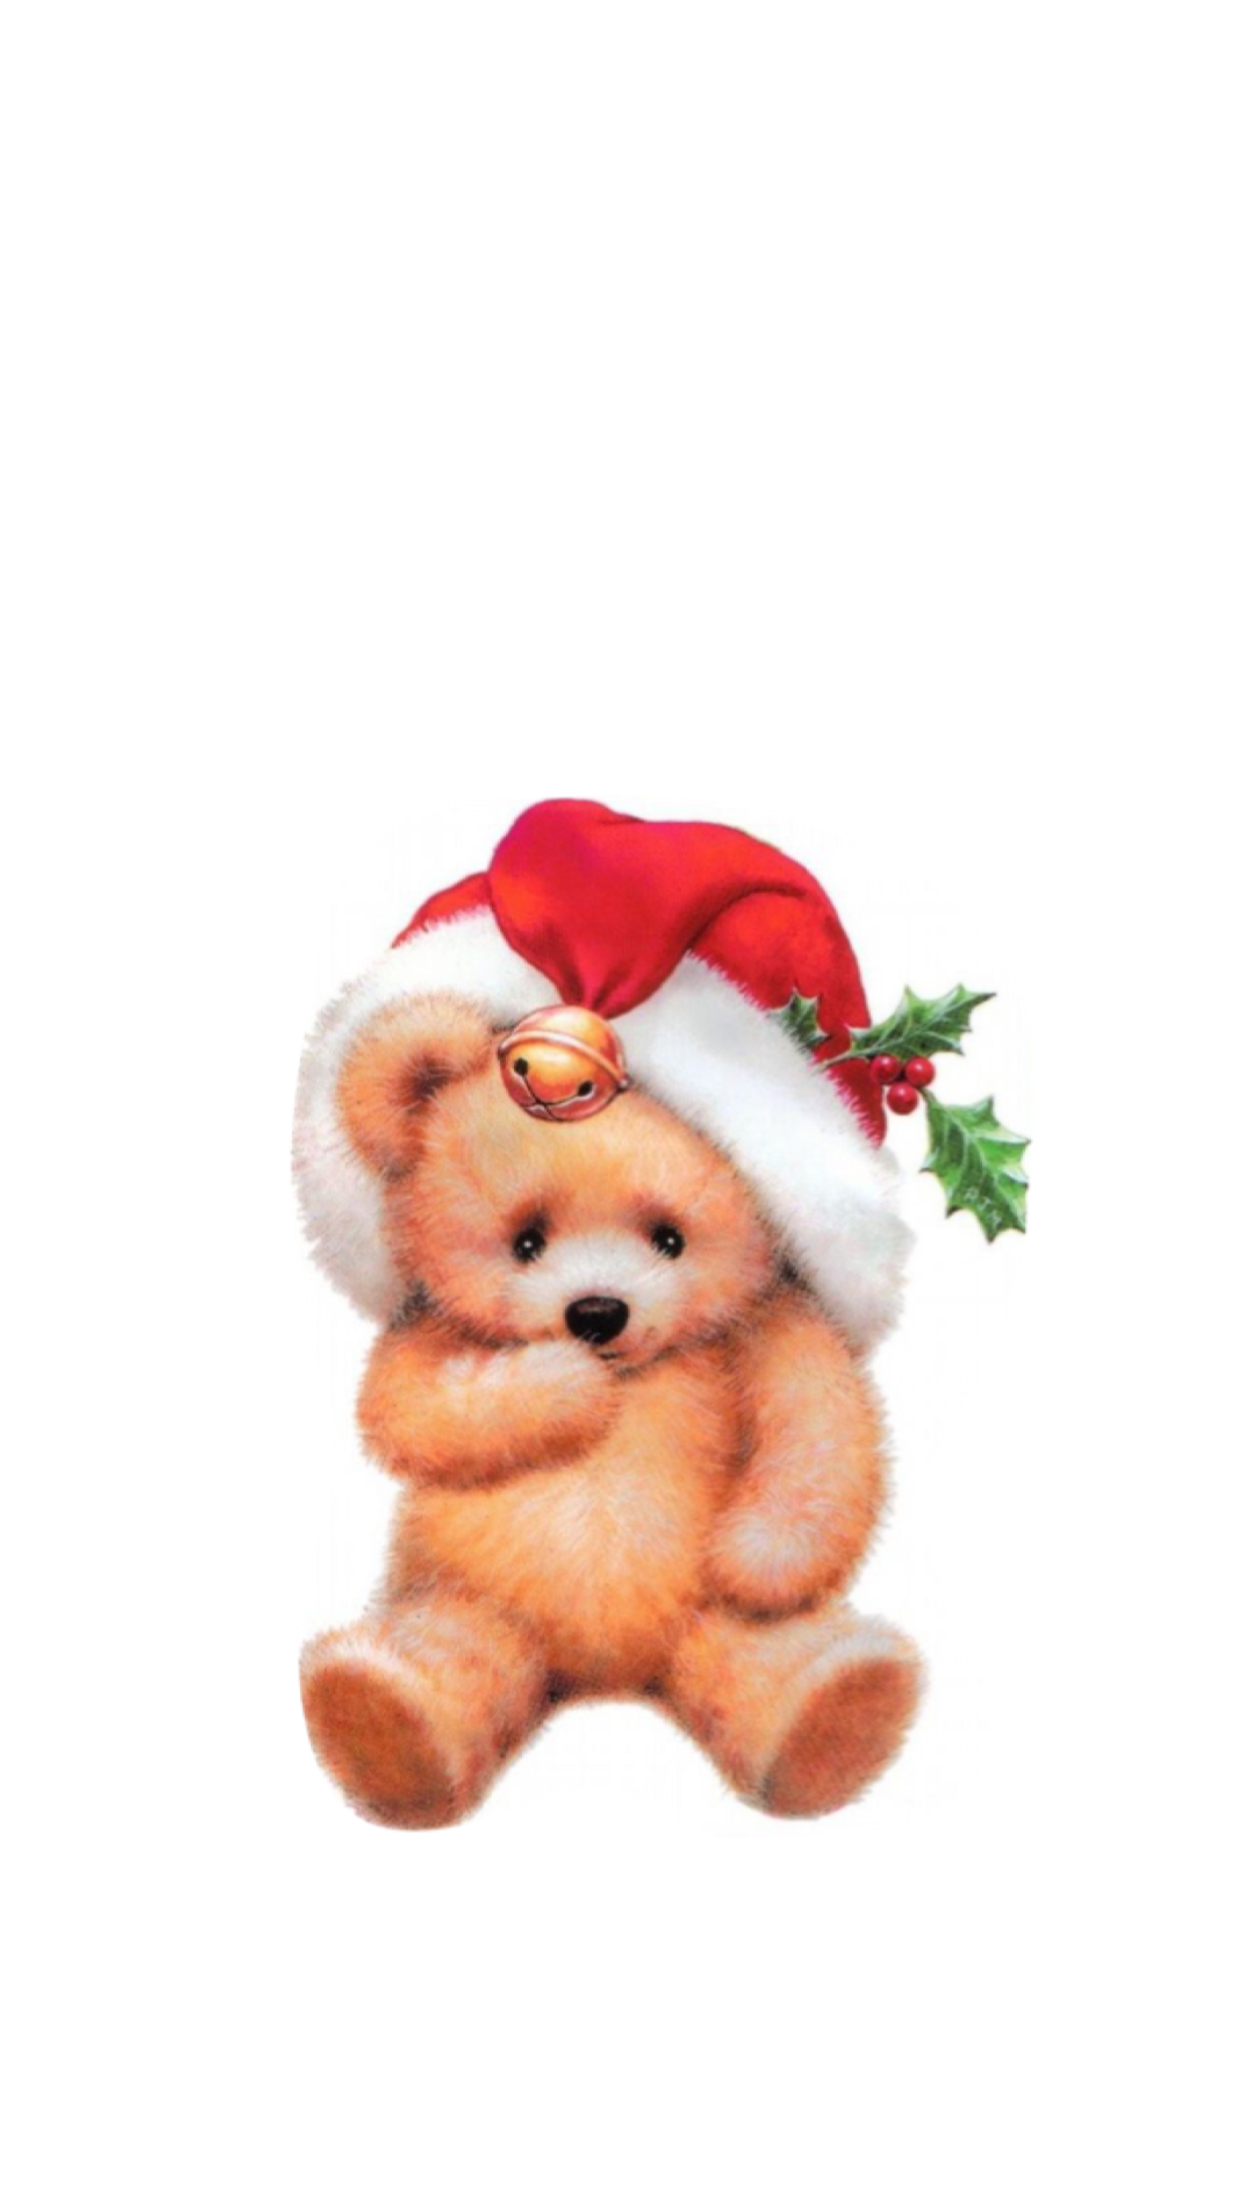 Christmas Wallpaper 2. Teddy bear wallpaper, Christmas bear, Bear wallpaper